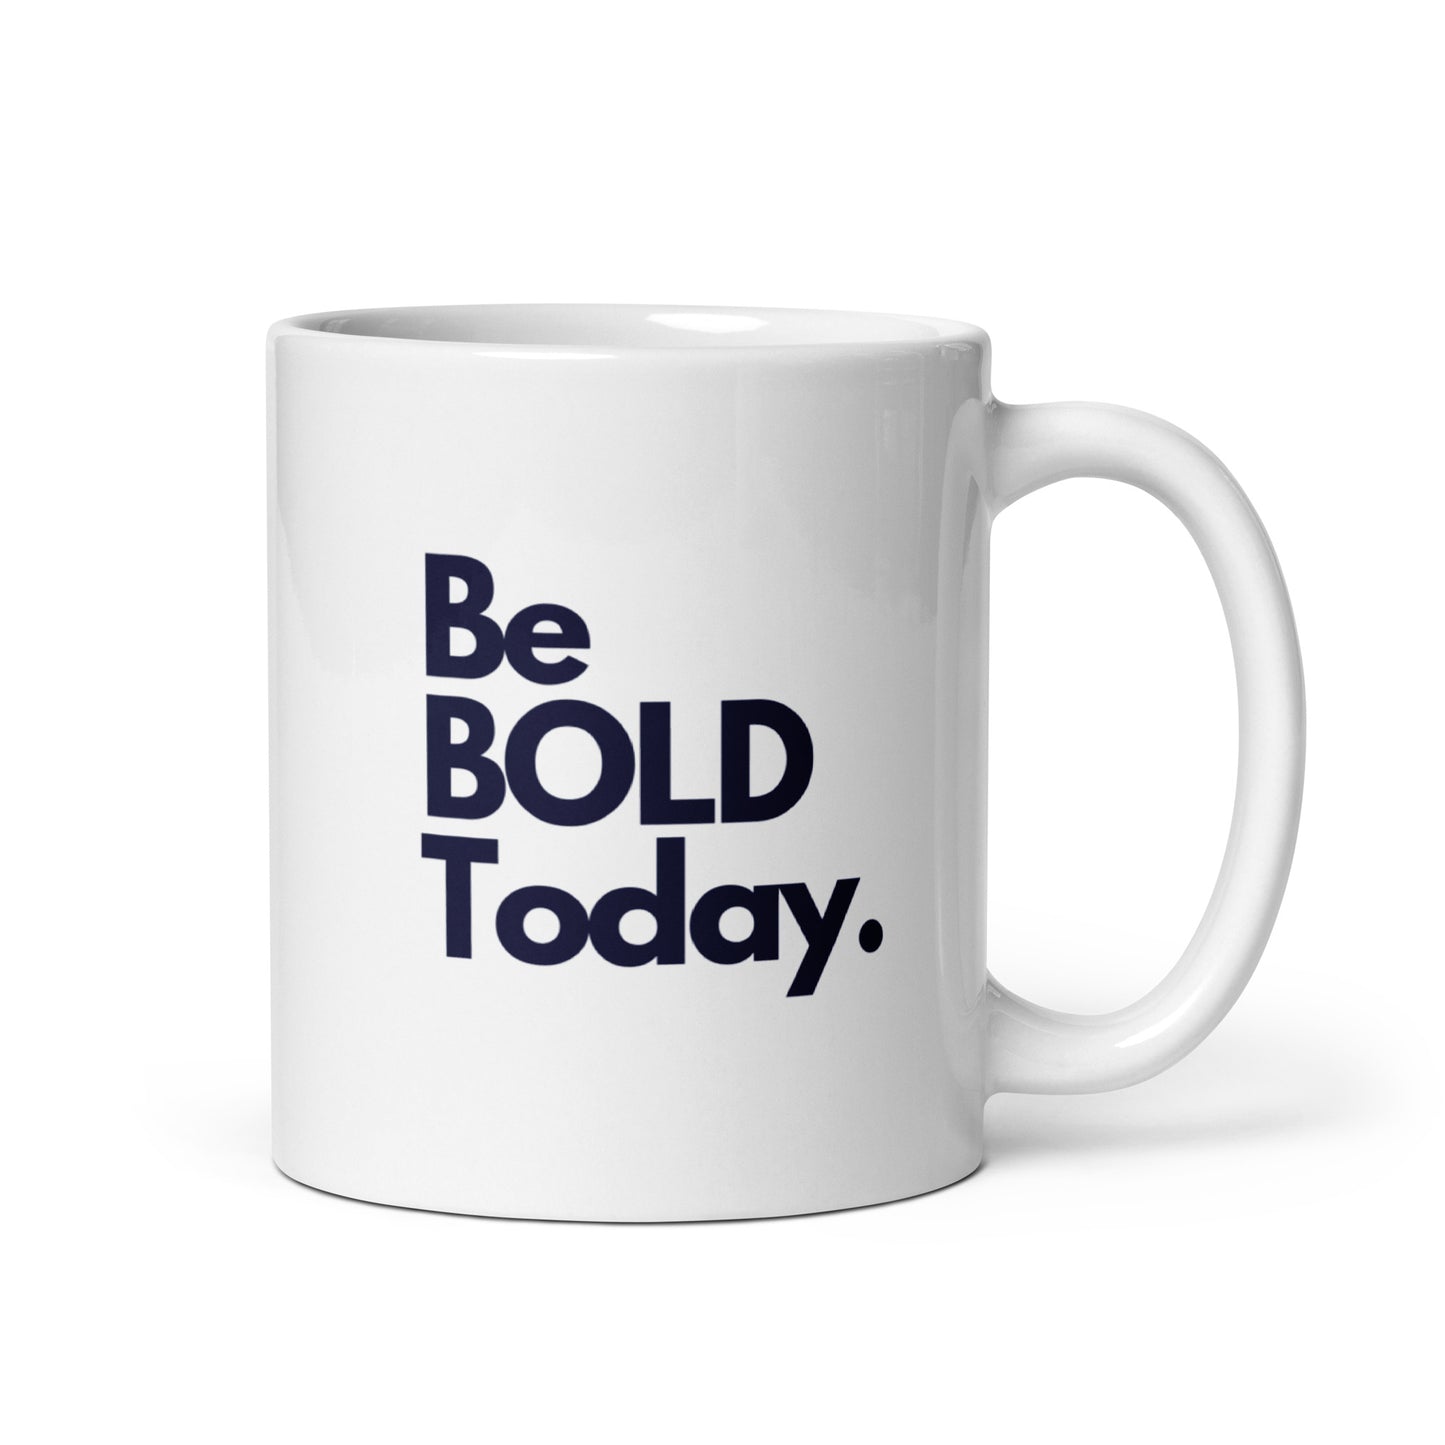 Be BOLD Today White Glossy Mug